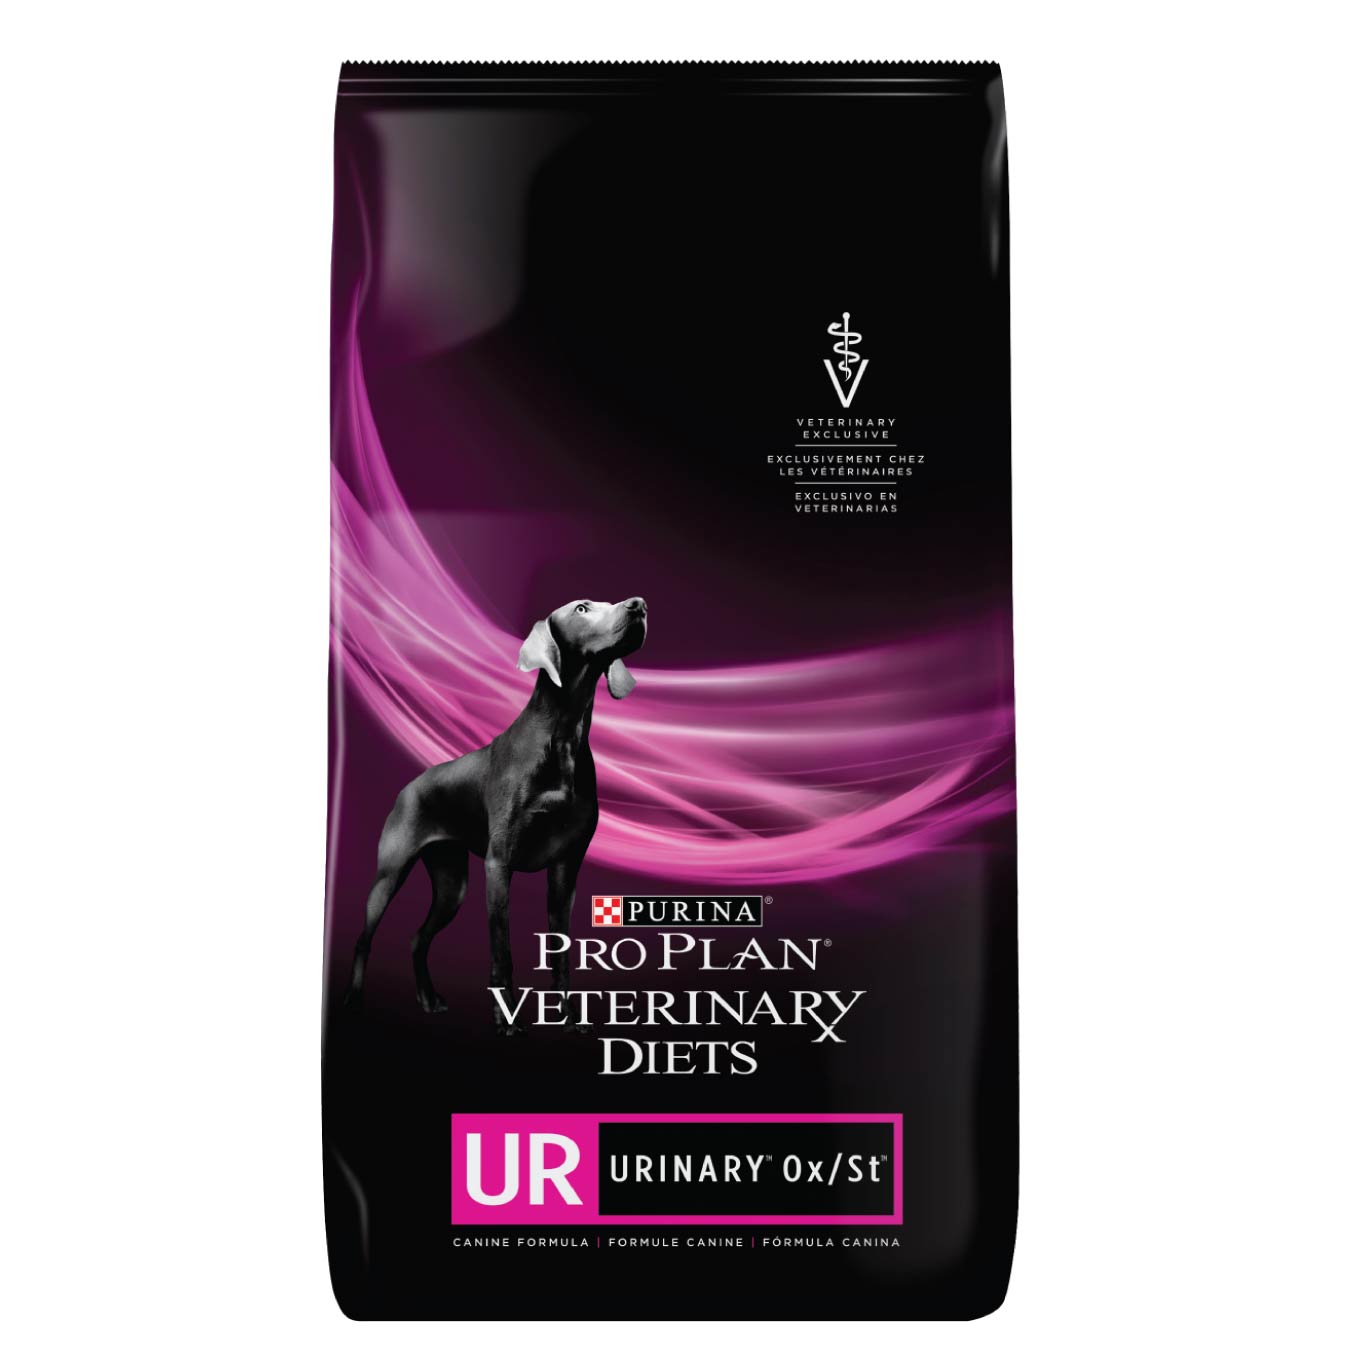 Pro Plan UR Urinary ox/st - Alimento para Perro Veterinary Diets, perro, ProPlan, Mister Mascotas